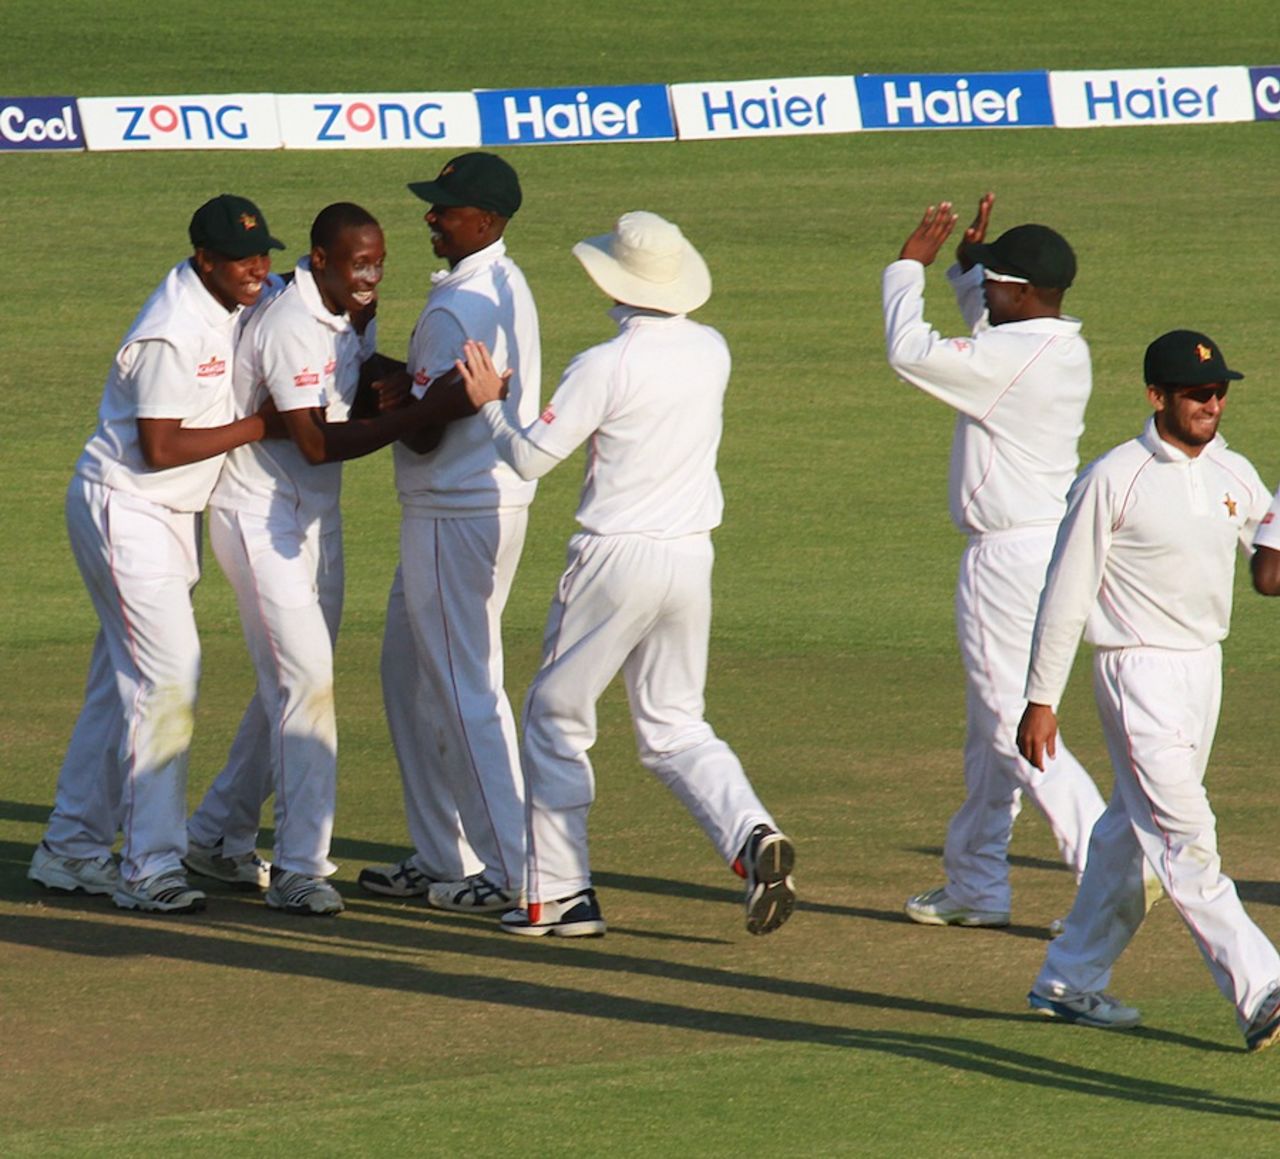 Shingi Masakadza is mobbed after dismissing Misbah-ul-Haq, Zimbabwe v Pakistan, 1st Test, 3rd day, Harare, September 5, 2013